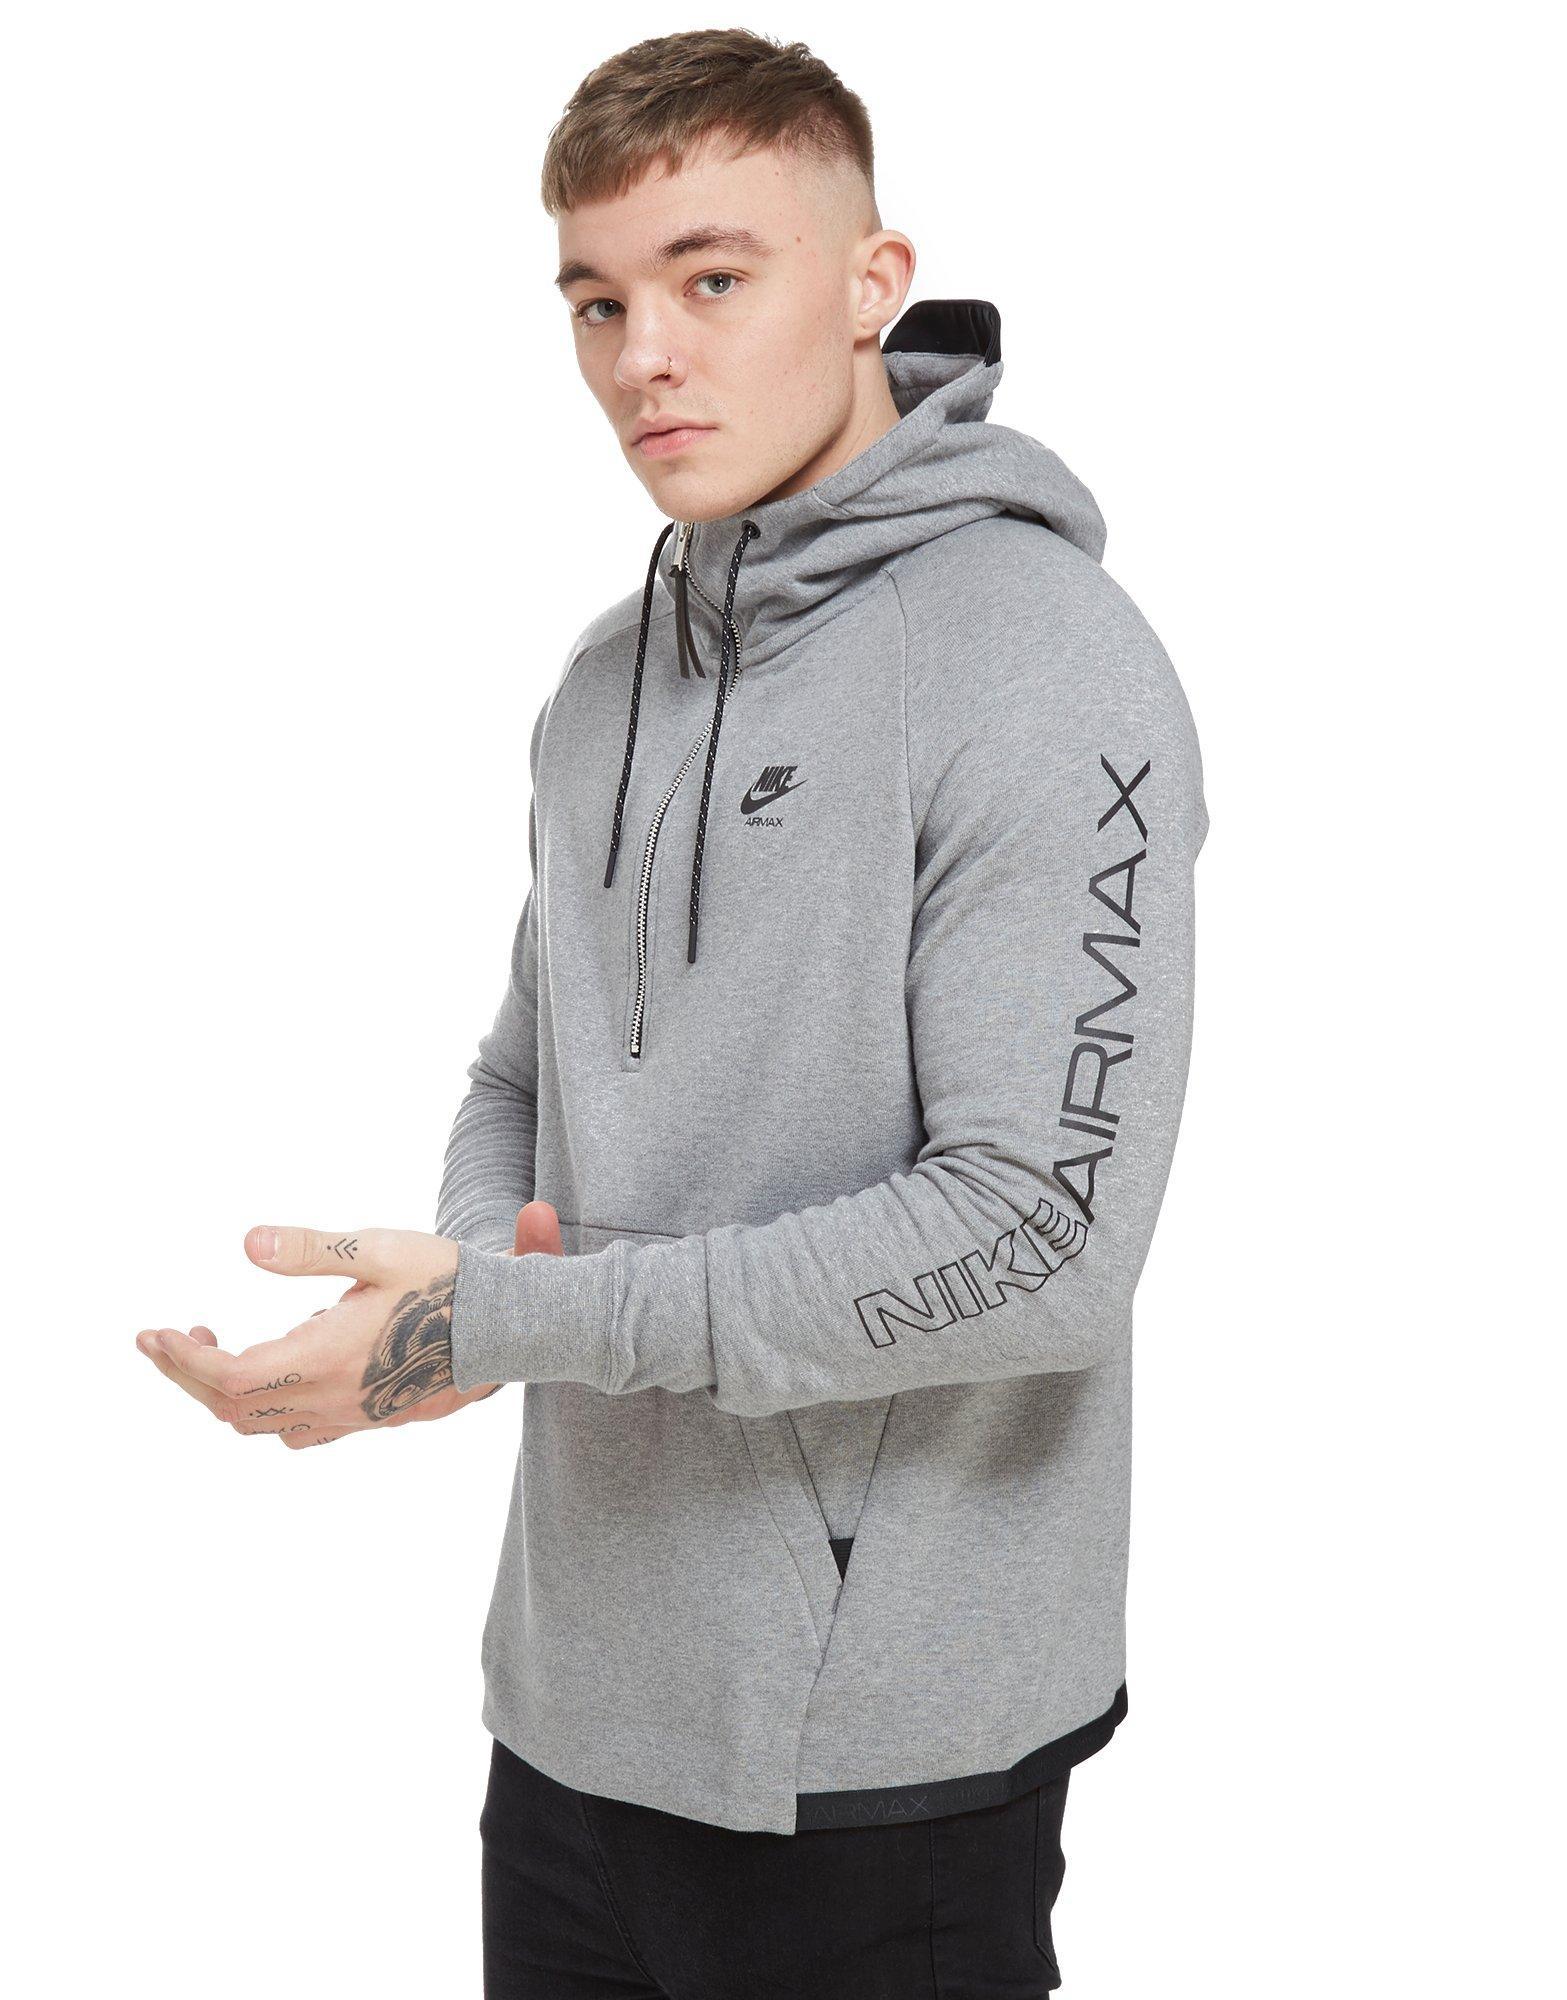 Nike Cotton Airmax Ft 1/2 Zip Hoodie in Grey/Black (Gray) for Men - Lyst